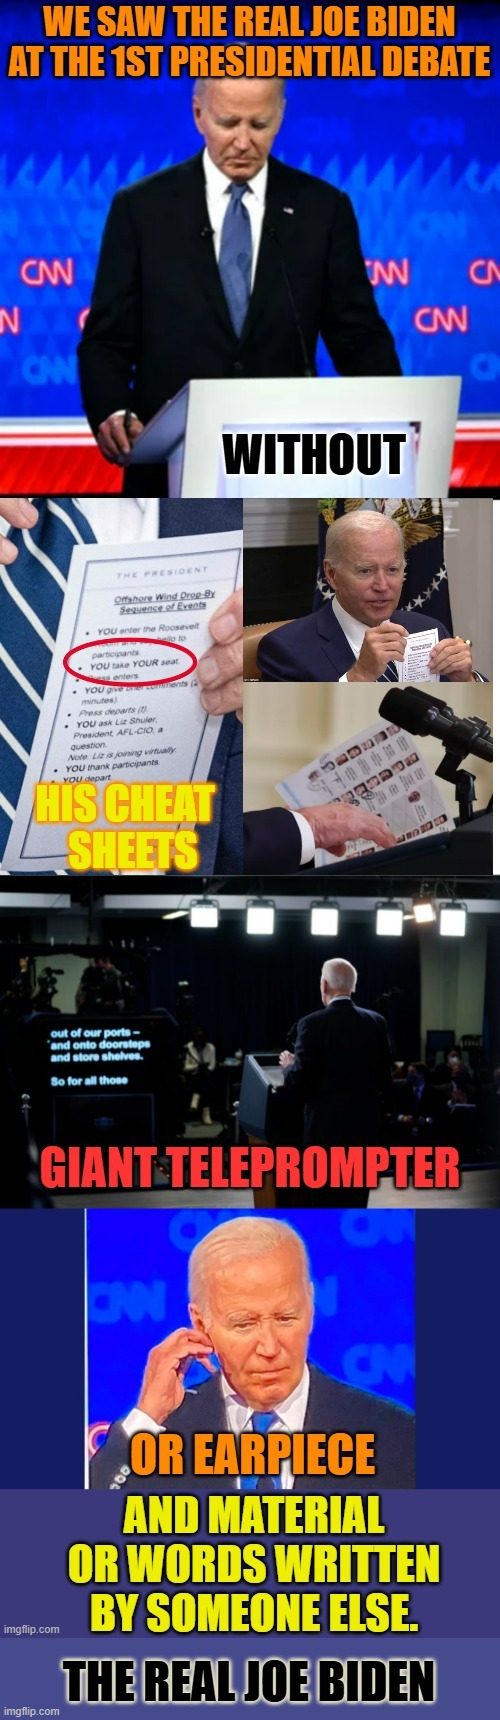 The Real Joe Biden | THE REAL JOE BIDEN | image tagged in memes,presidential debate,no,help,real,joe biden | made w/ Imgflip meme maker